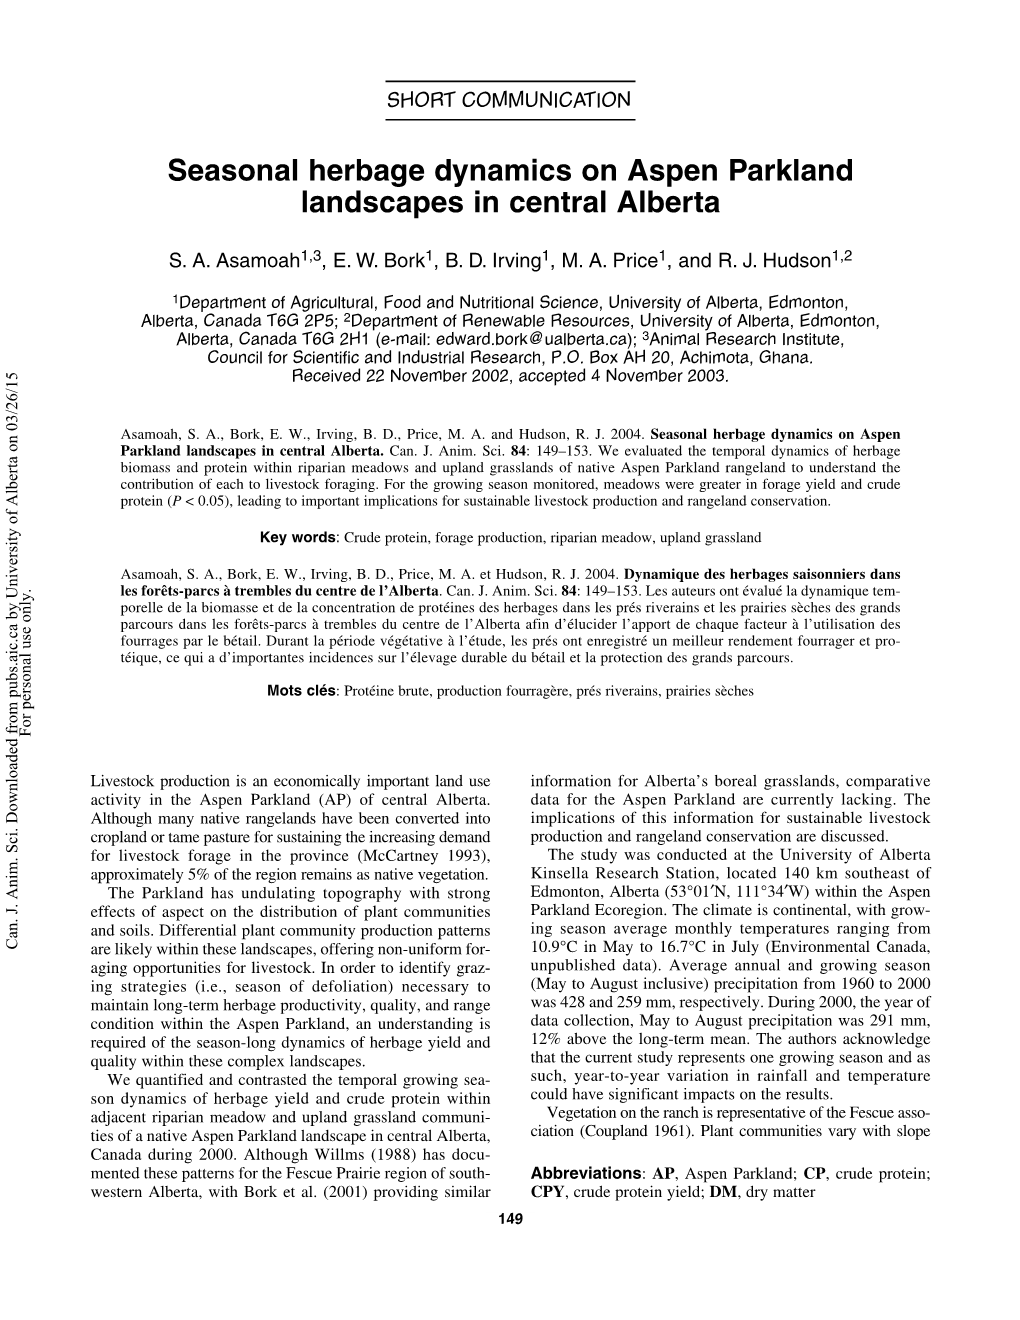 Seasonal Herbage Dynamics on Aspen Parkland Landscapes in Central Alberta